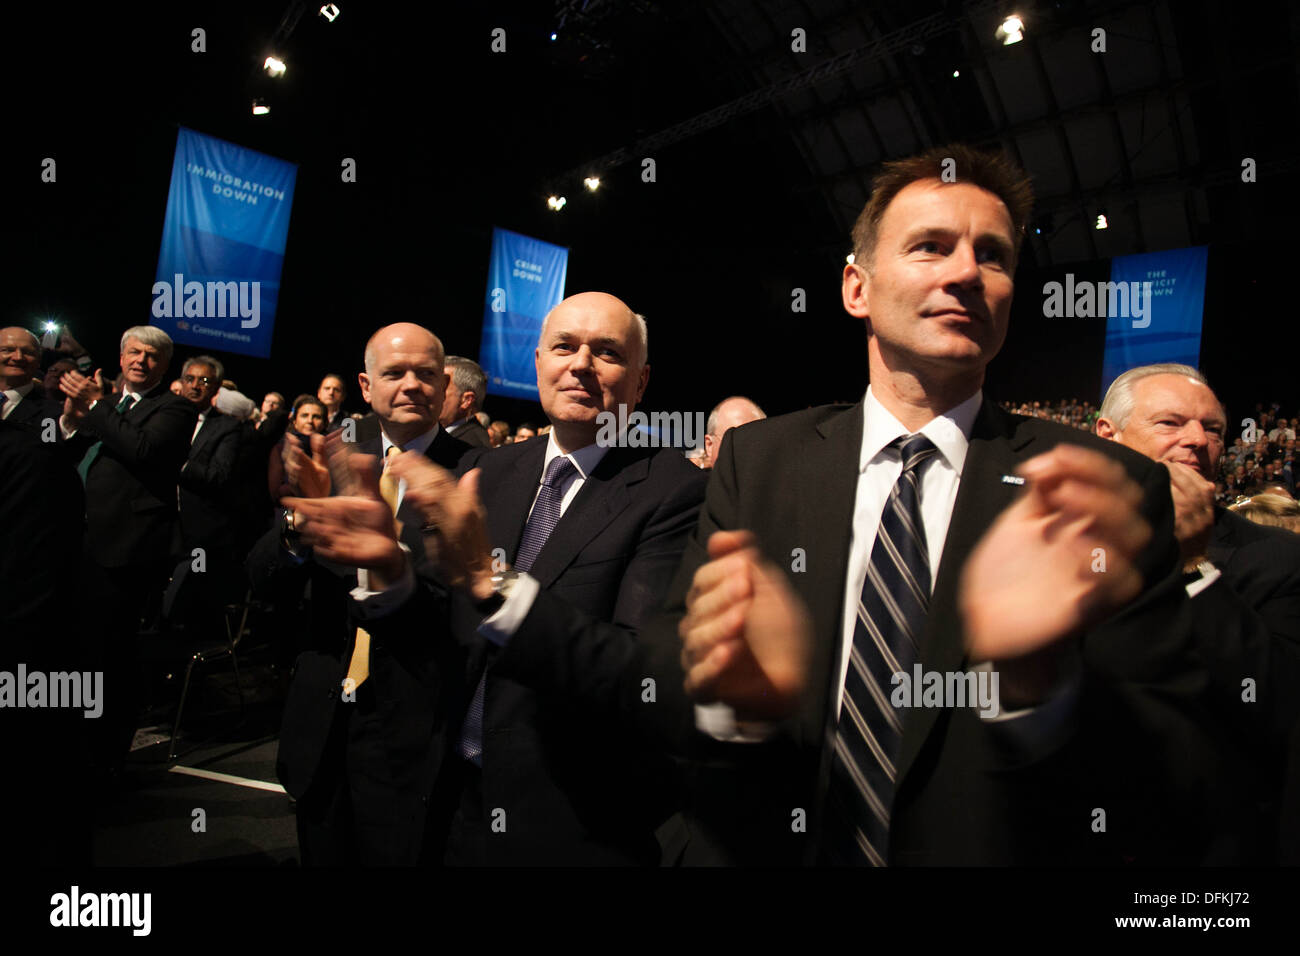 William Hague, Iain Duncan Smith und Jeremy Hunt watch David Camerons Rede am Parteitag der Konservativen in Manchester Stockfoto